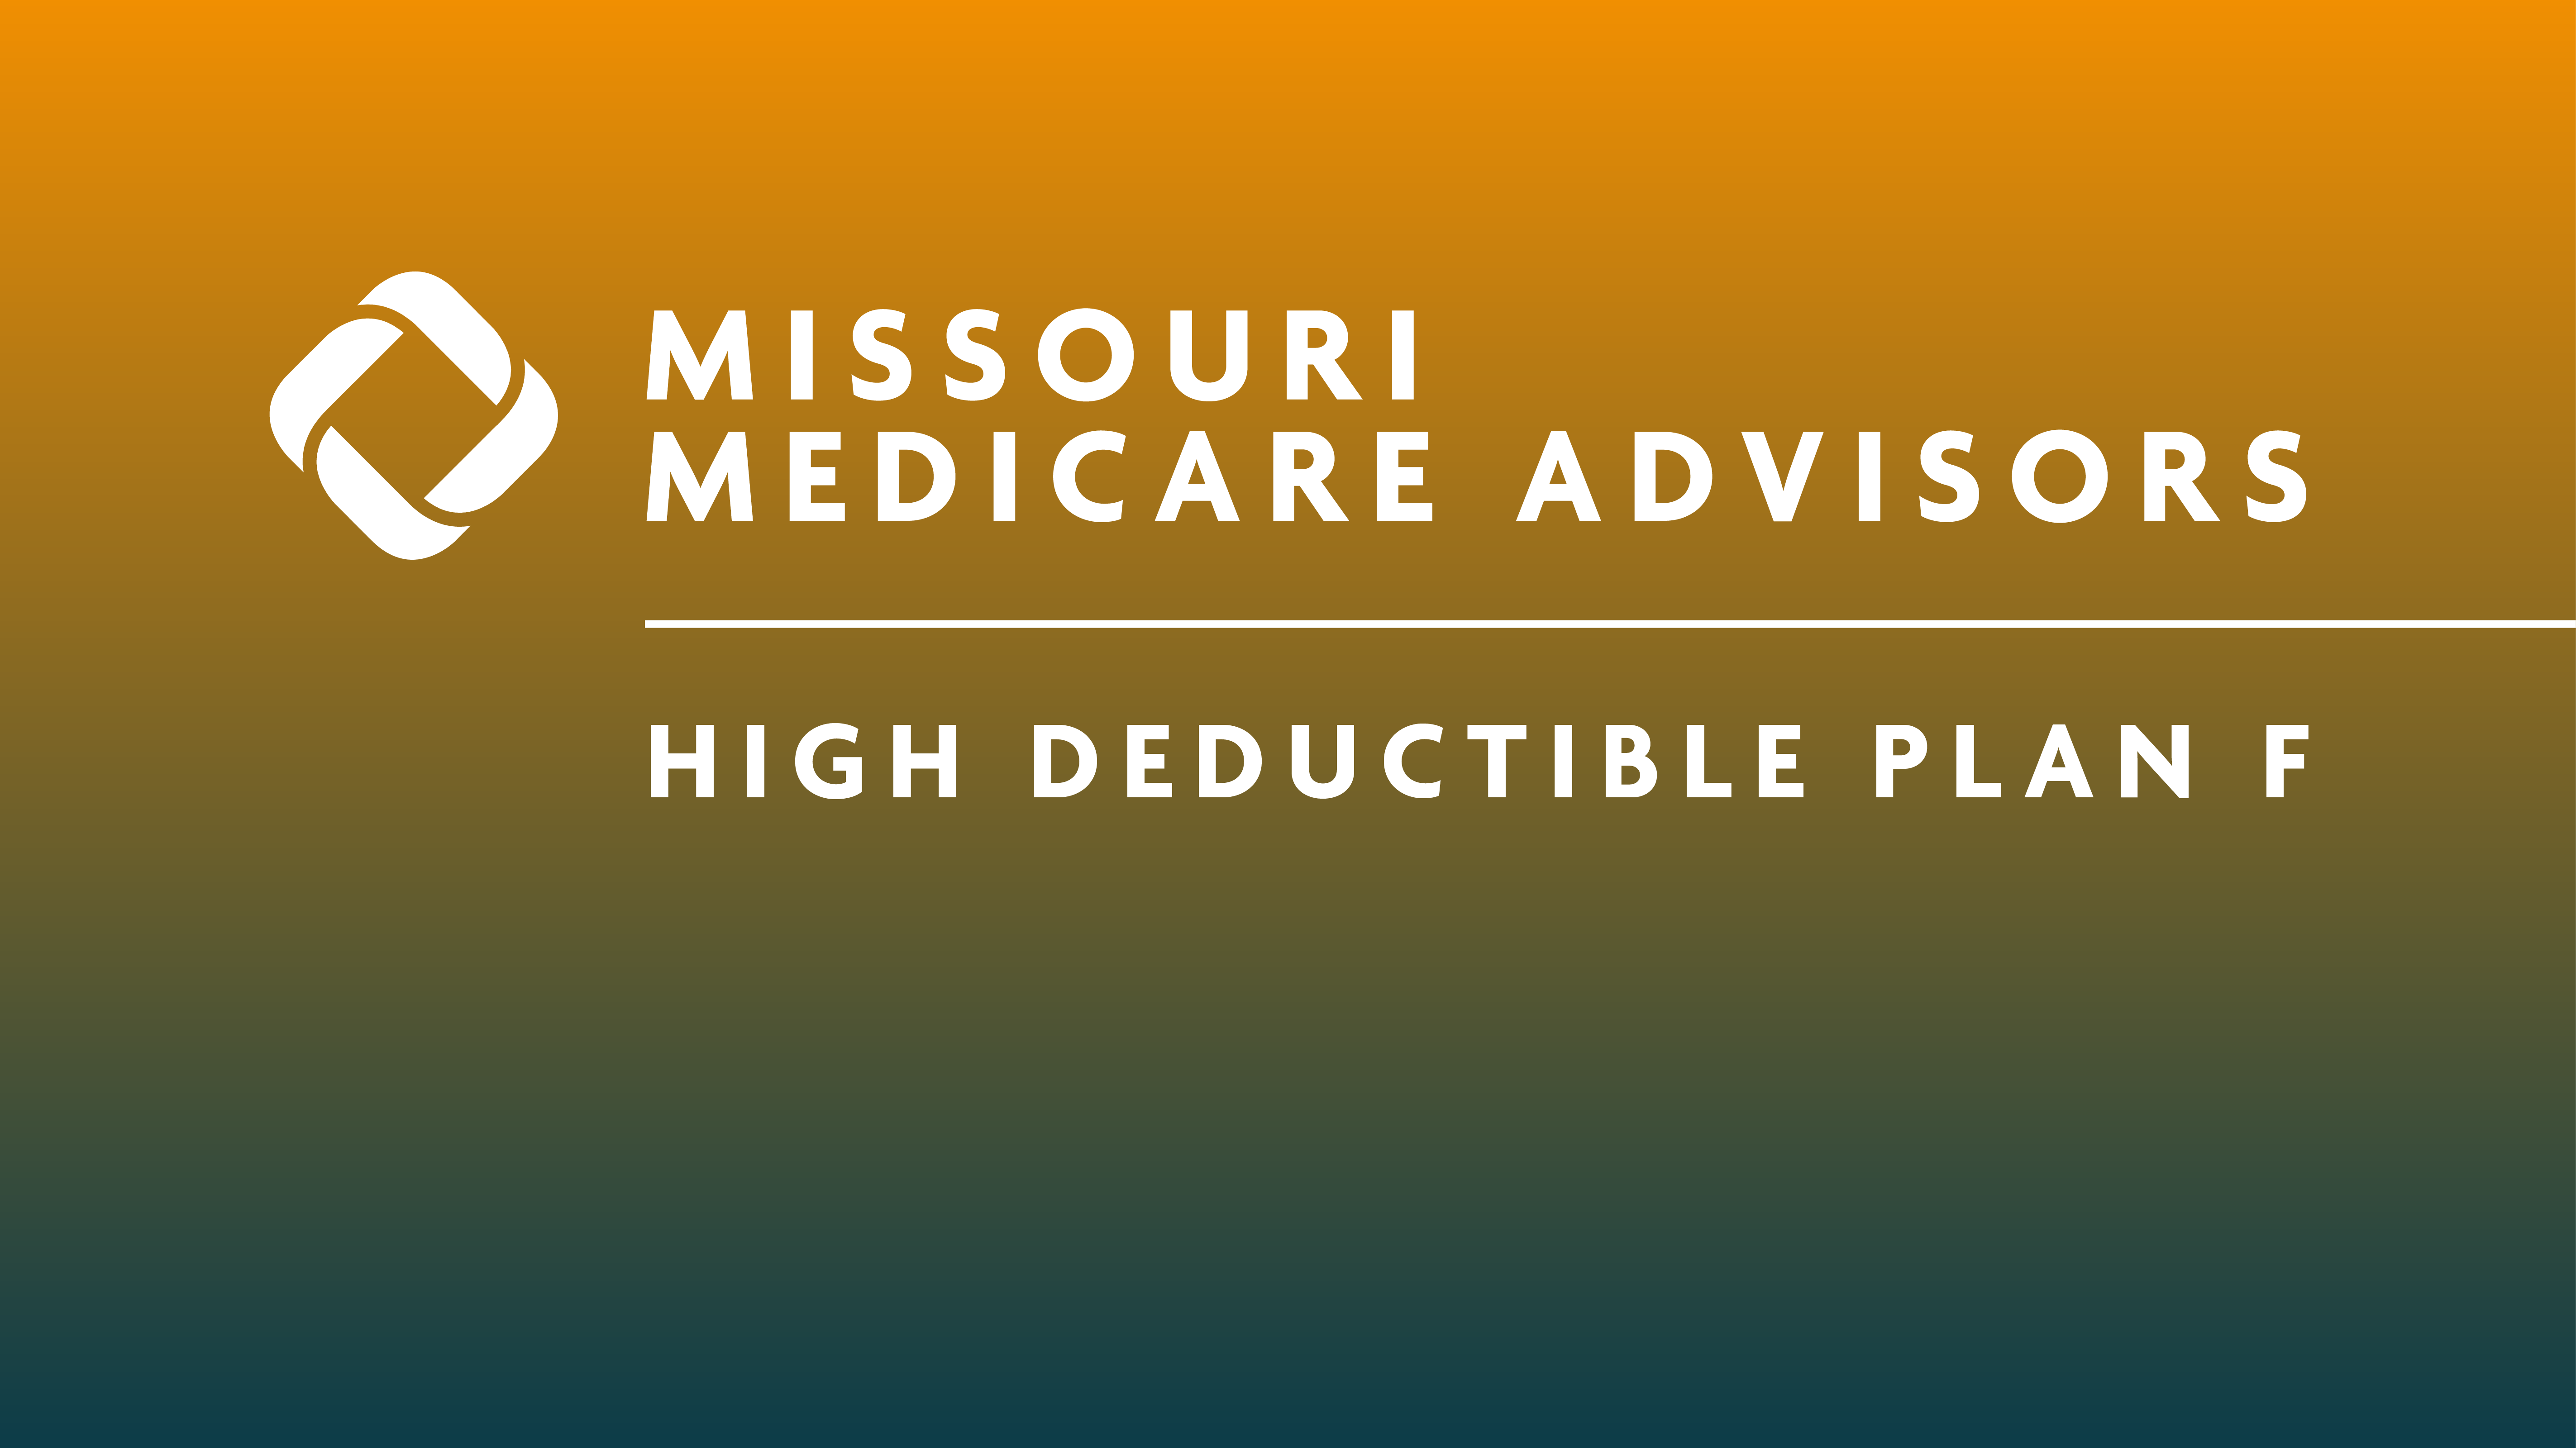 High deductible plan F explained by Missouri Insurance Advisors.